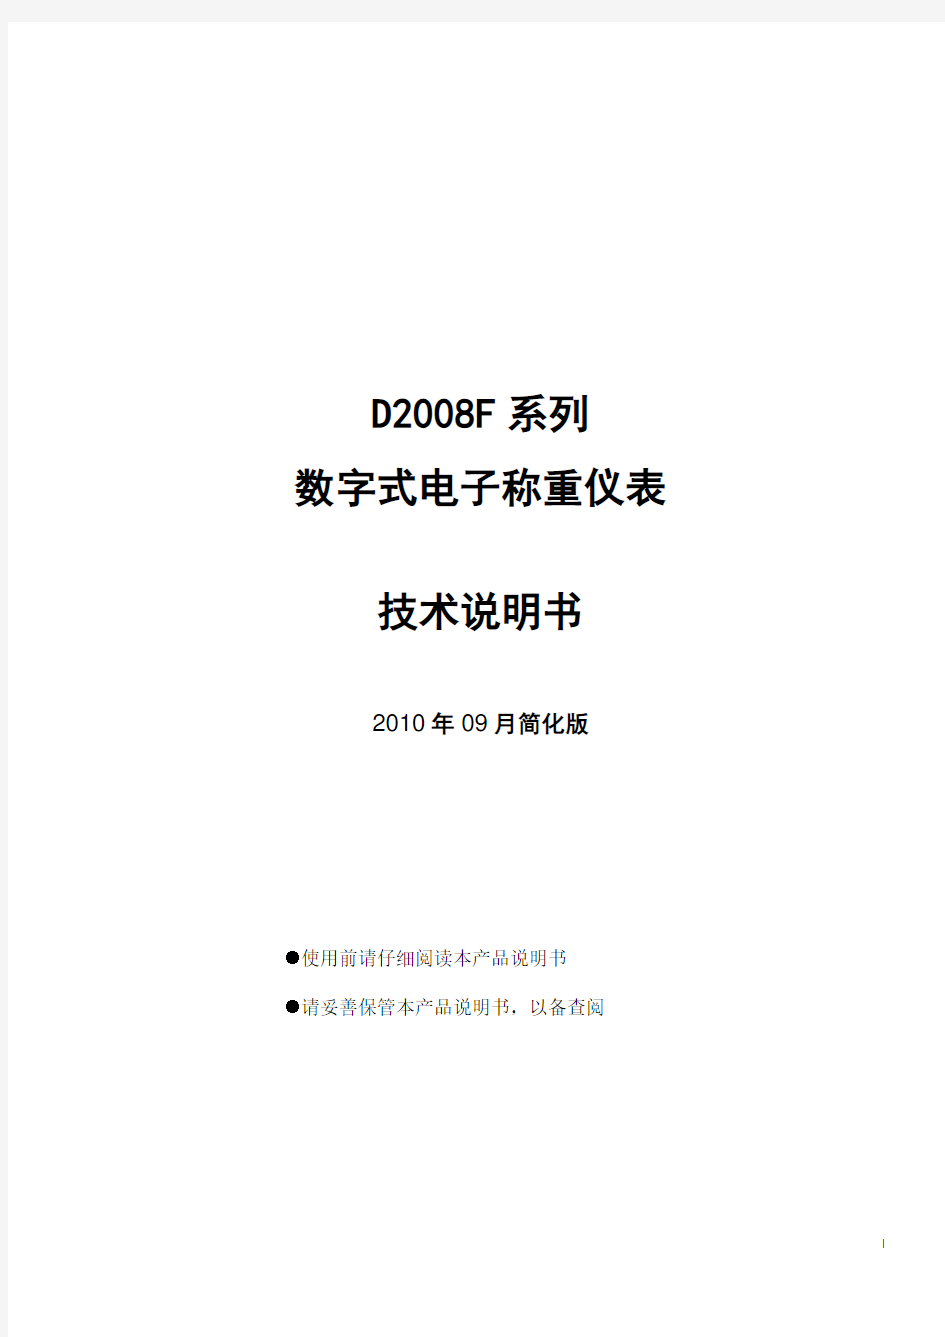 D2008F系列技术说明书简化版(中性)